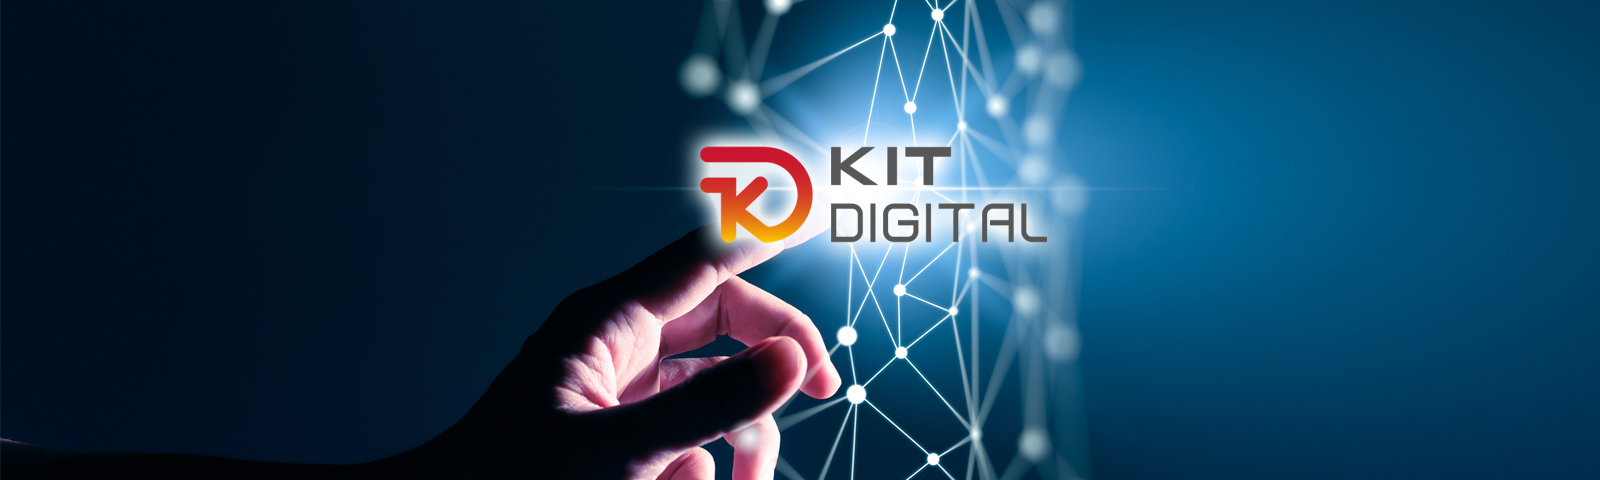 KitDigital para empresas de 0 a 2 empleados: Segmento III